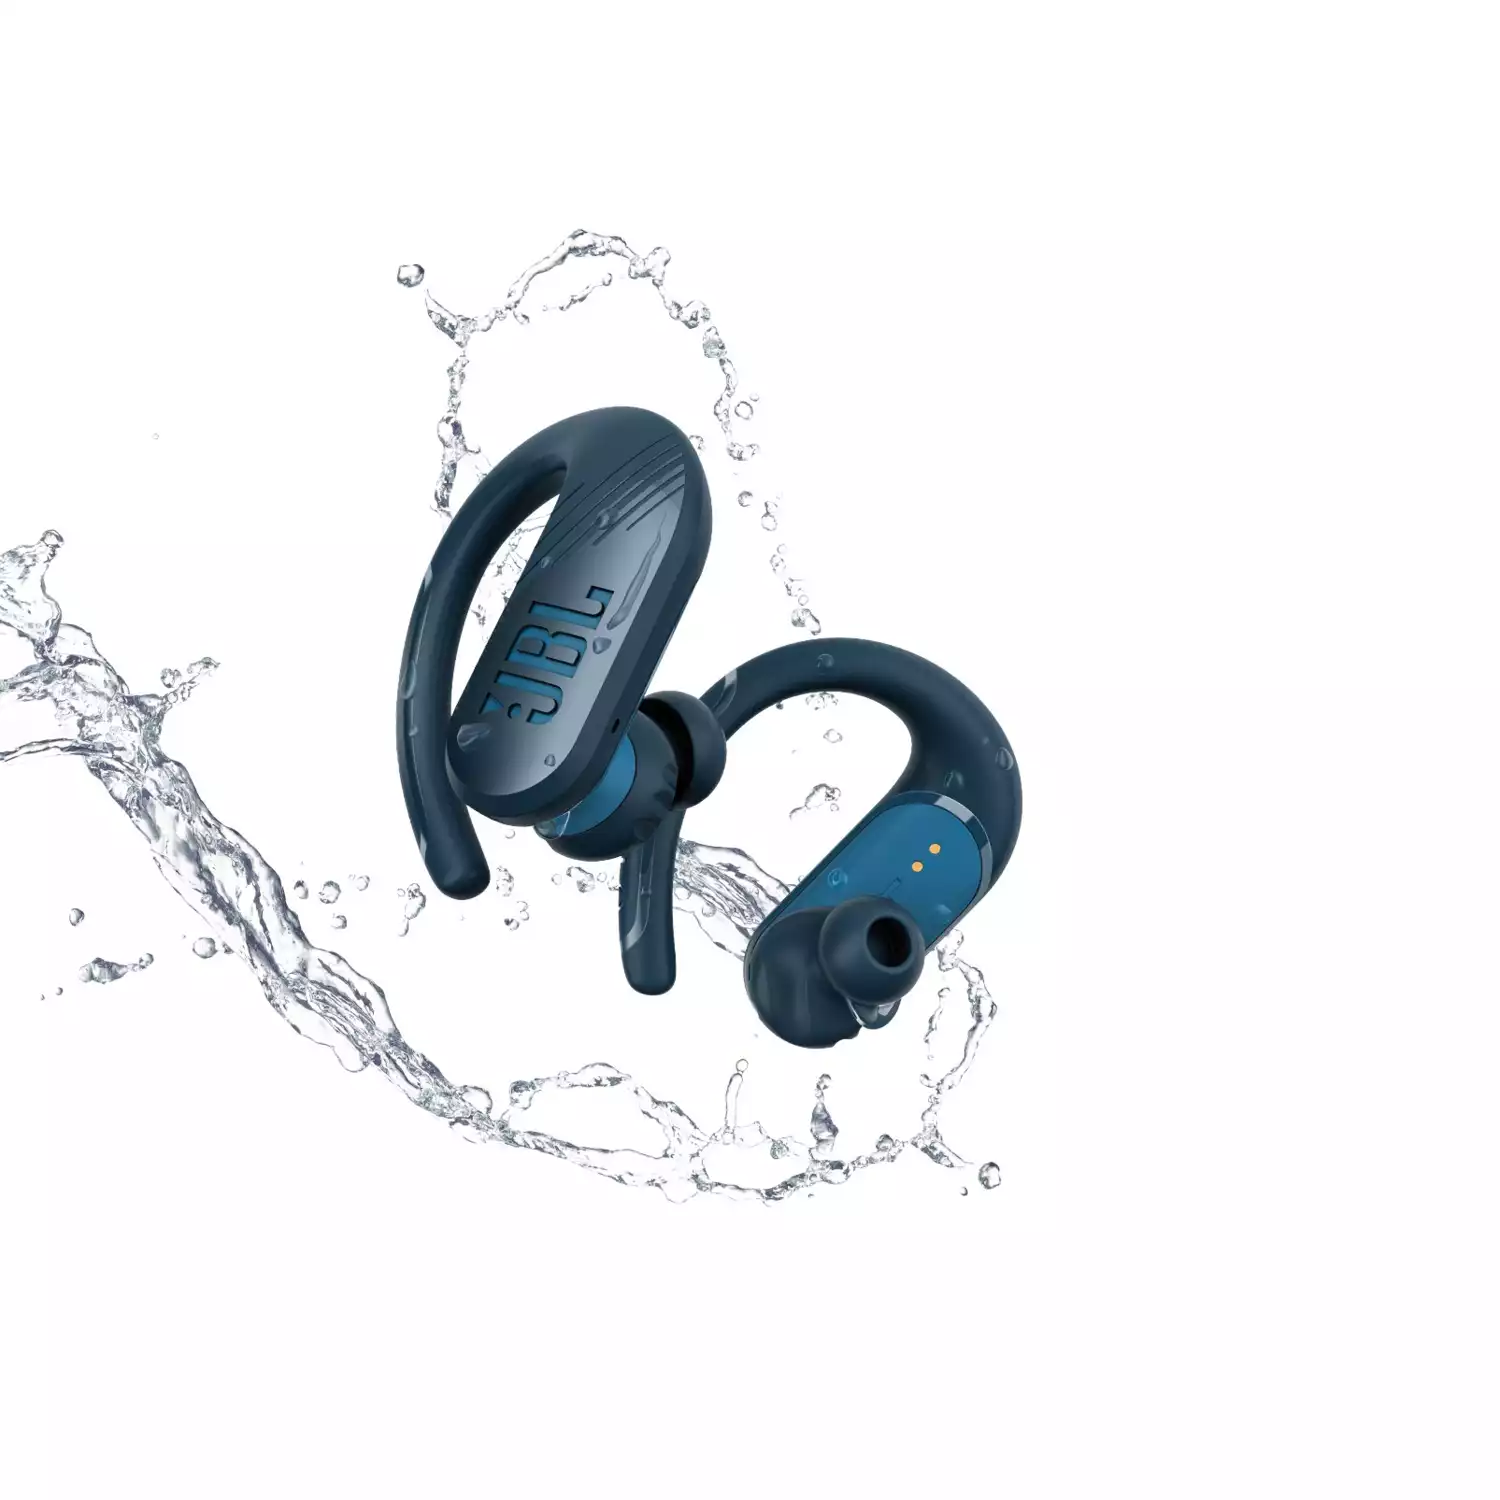 Športne brezžične slušalke ENDURANCE PEAK II, modre